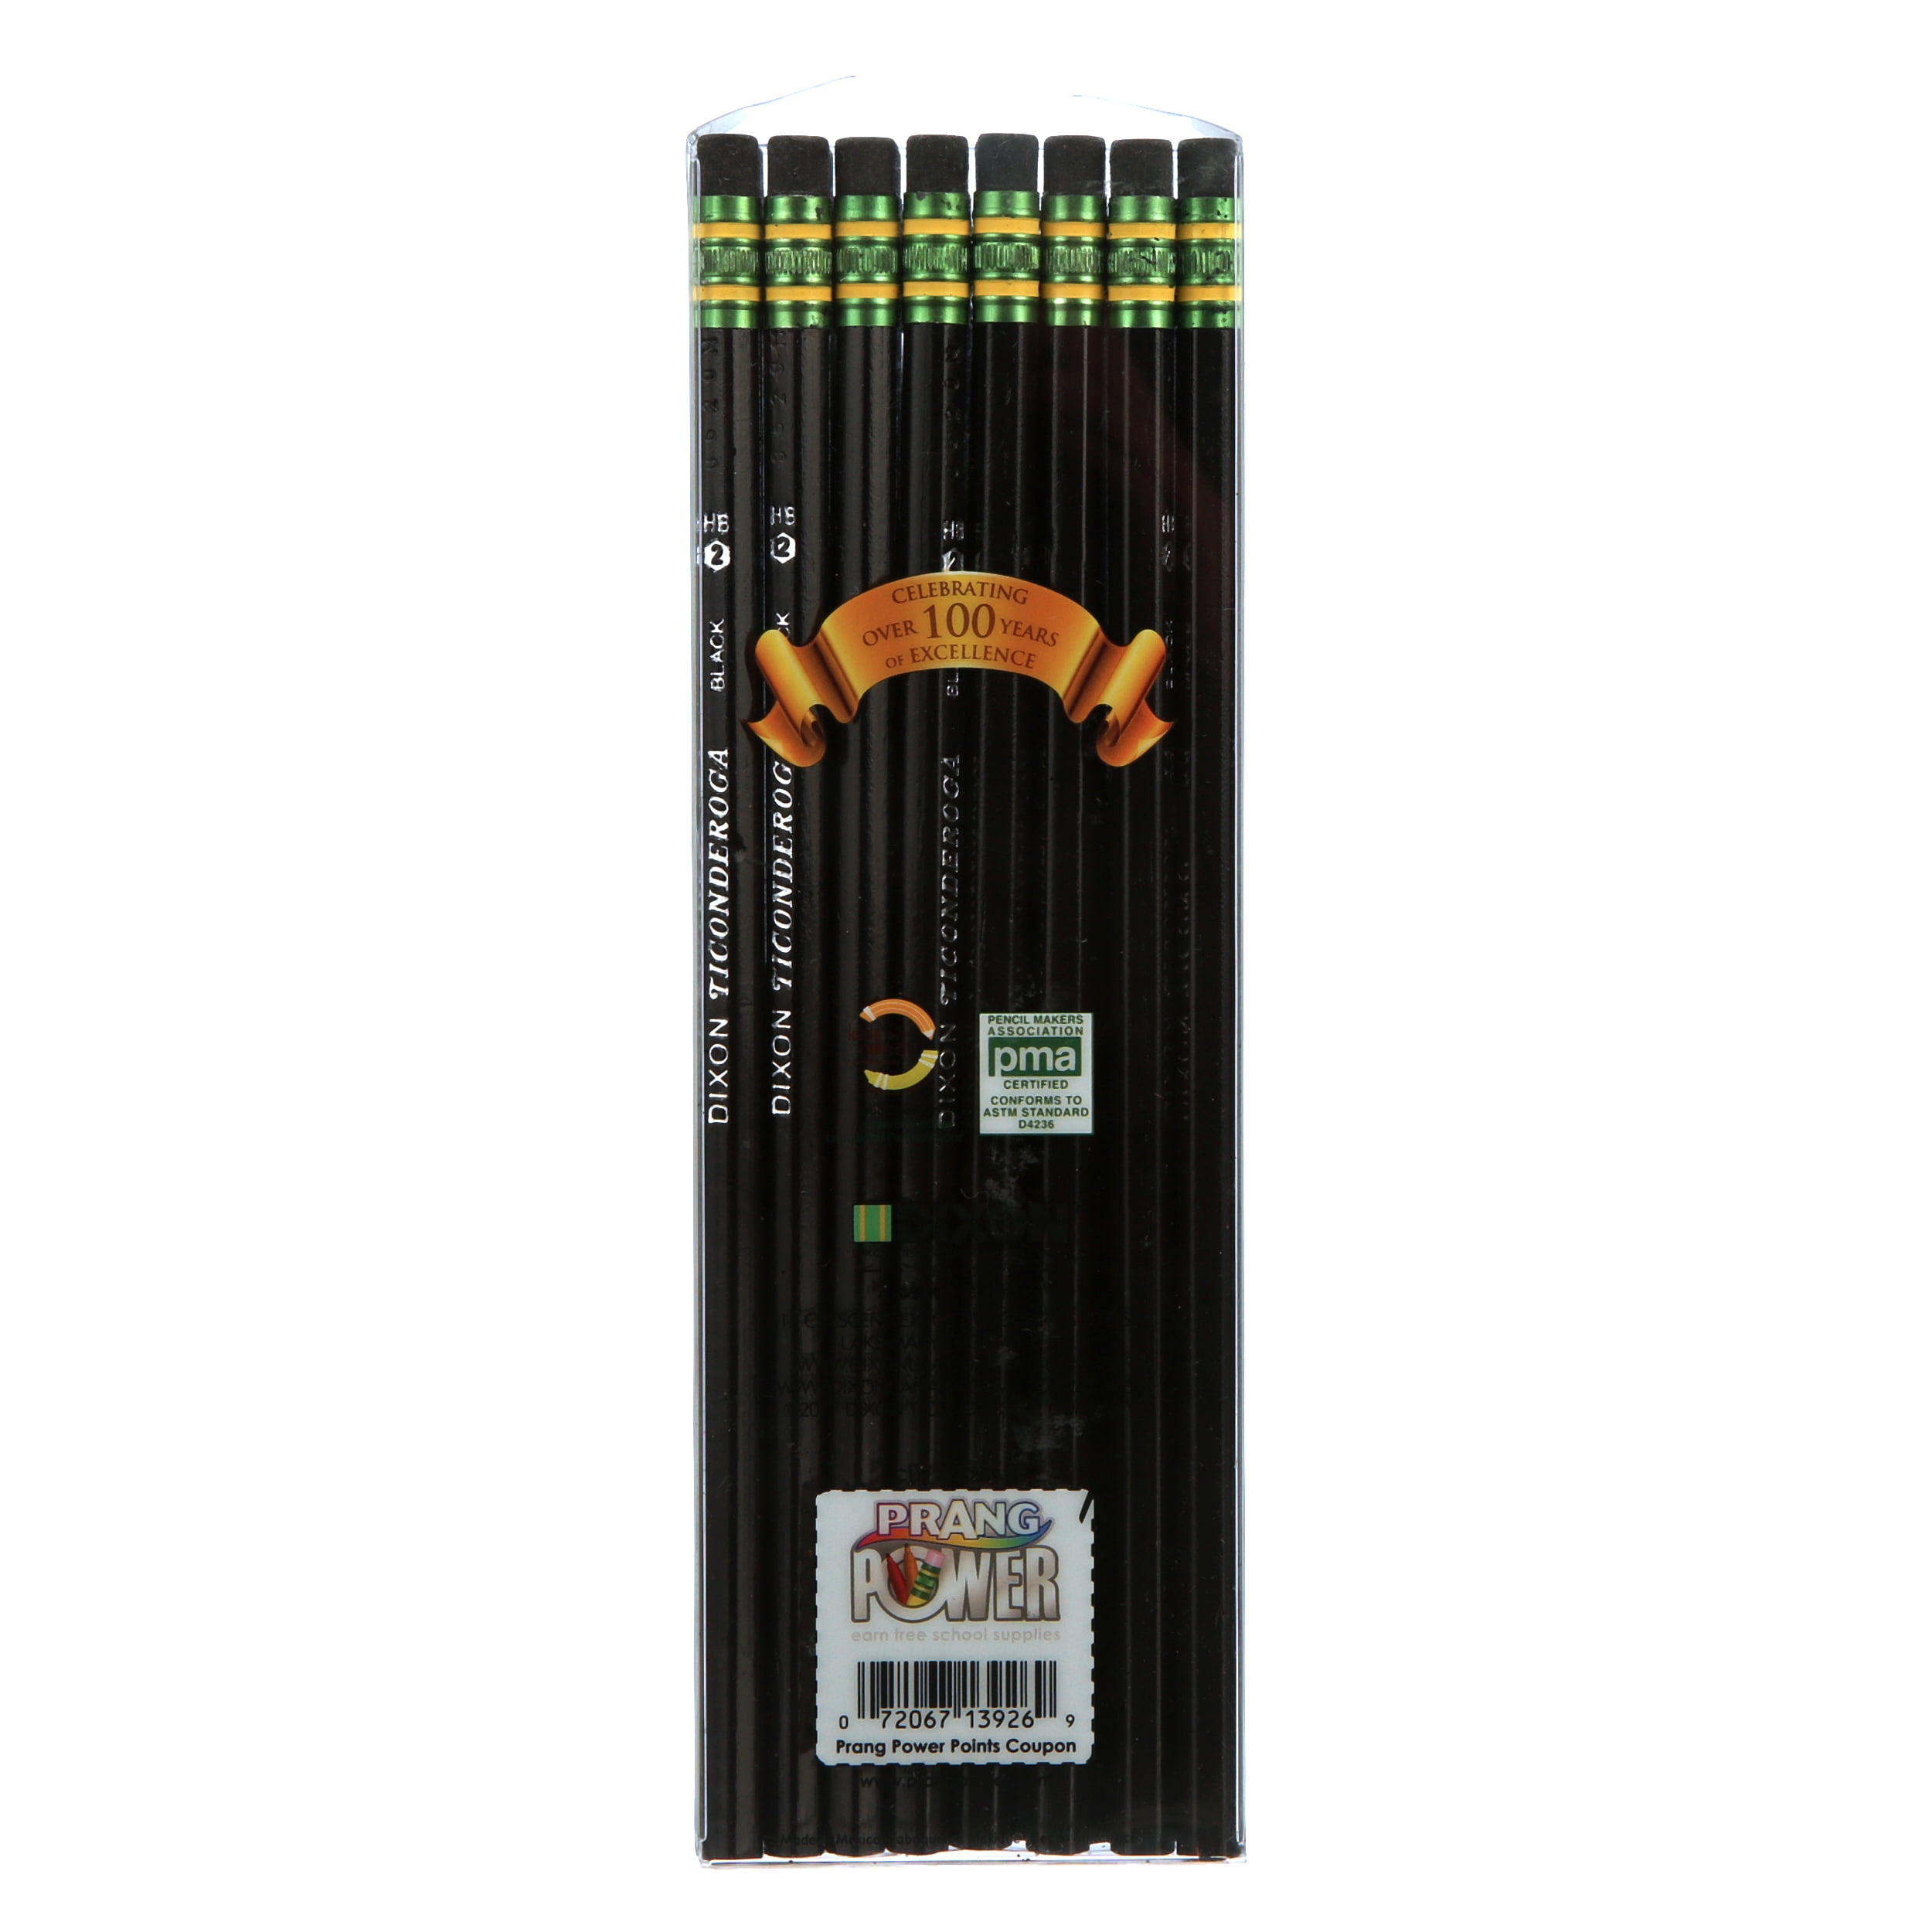 Yubbler - Ticonderoga Pencils, #2 Lead, Medium Soft, Pack of 24